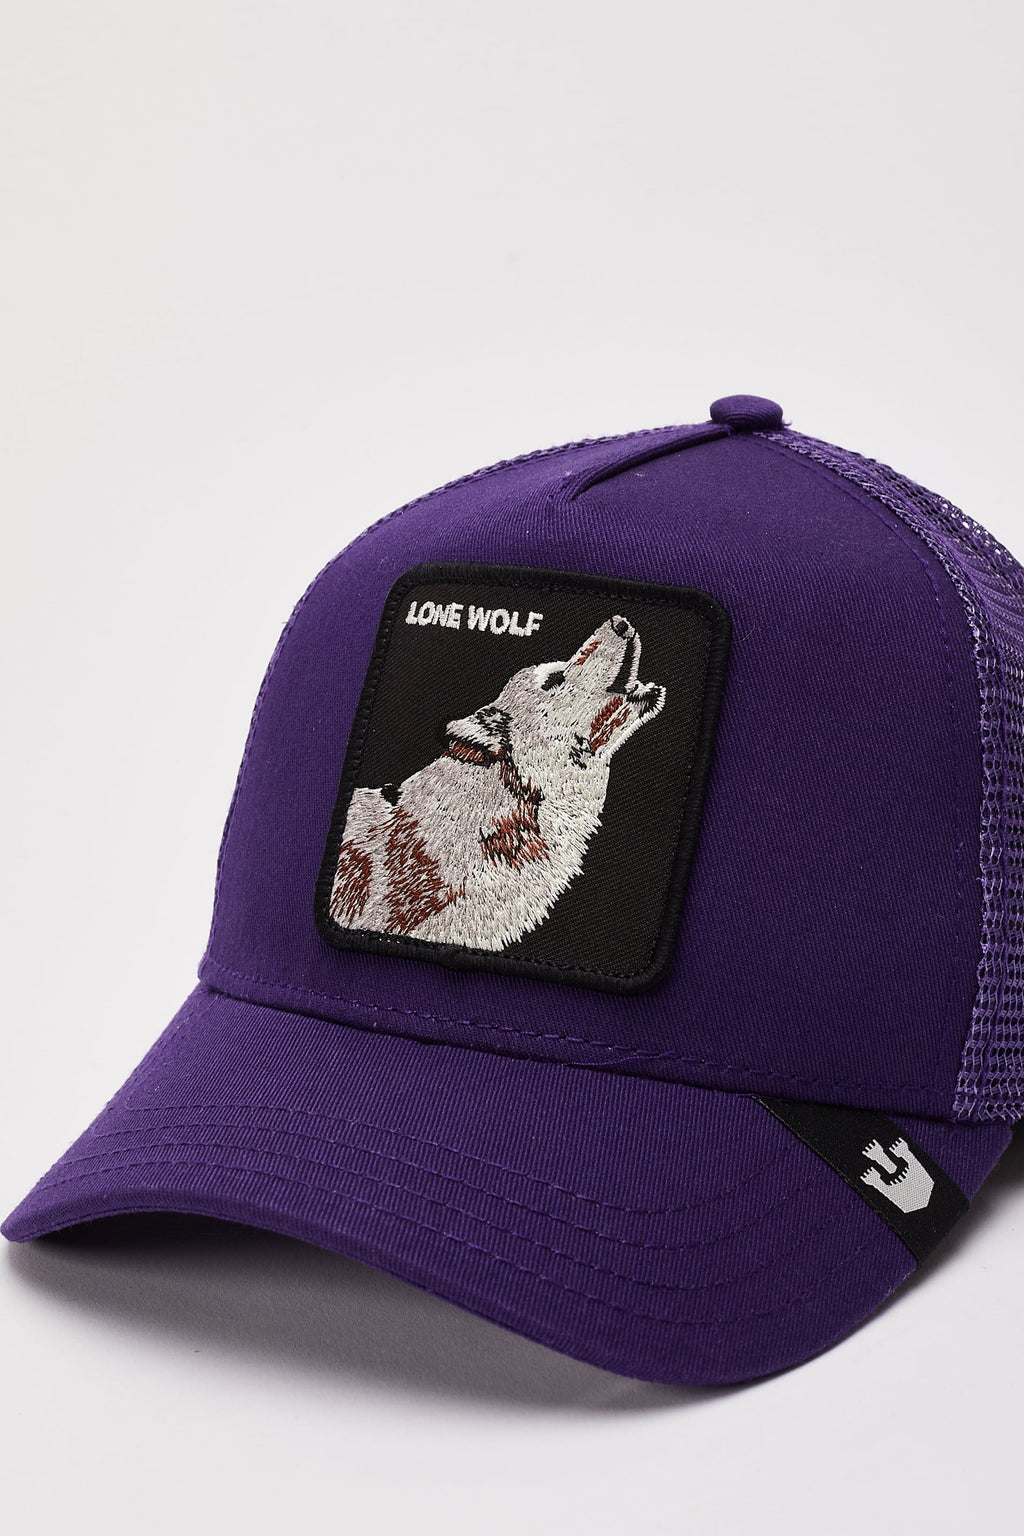 The Lone Wolf Trucker Hat